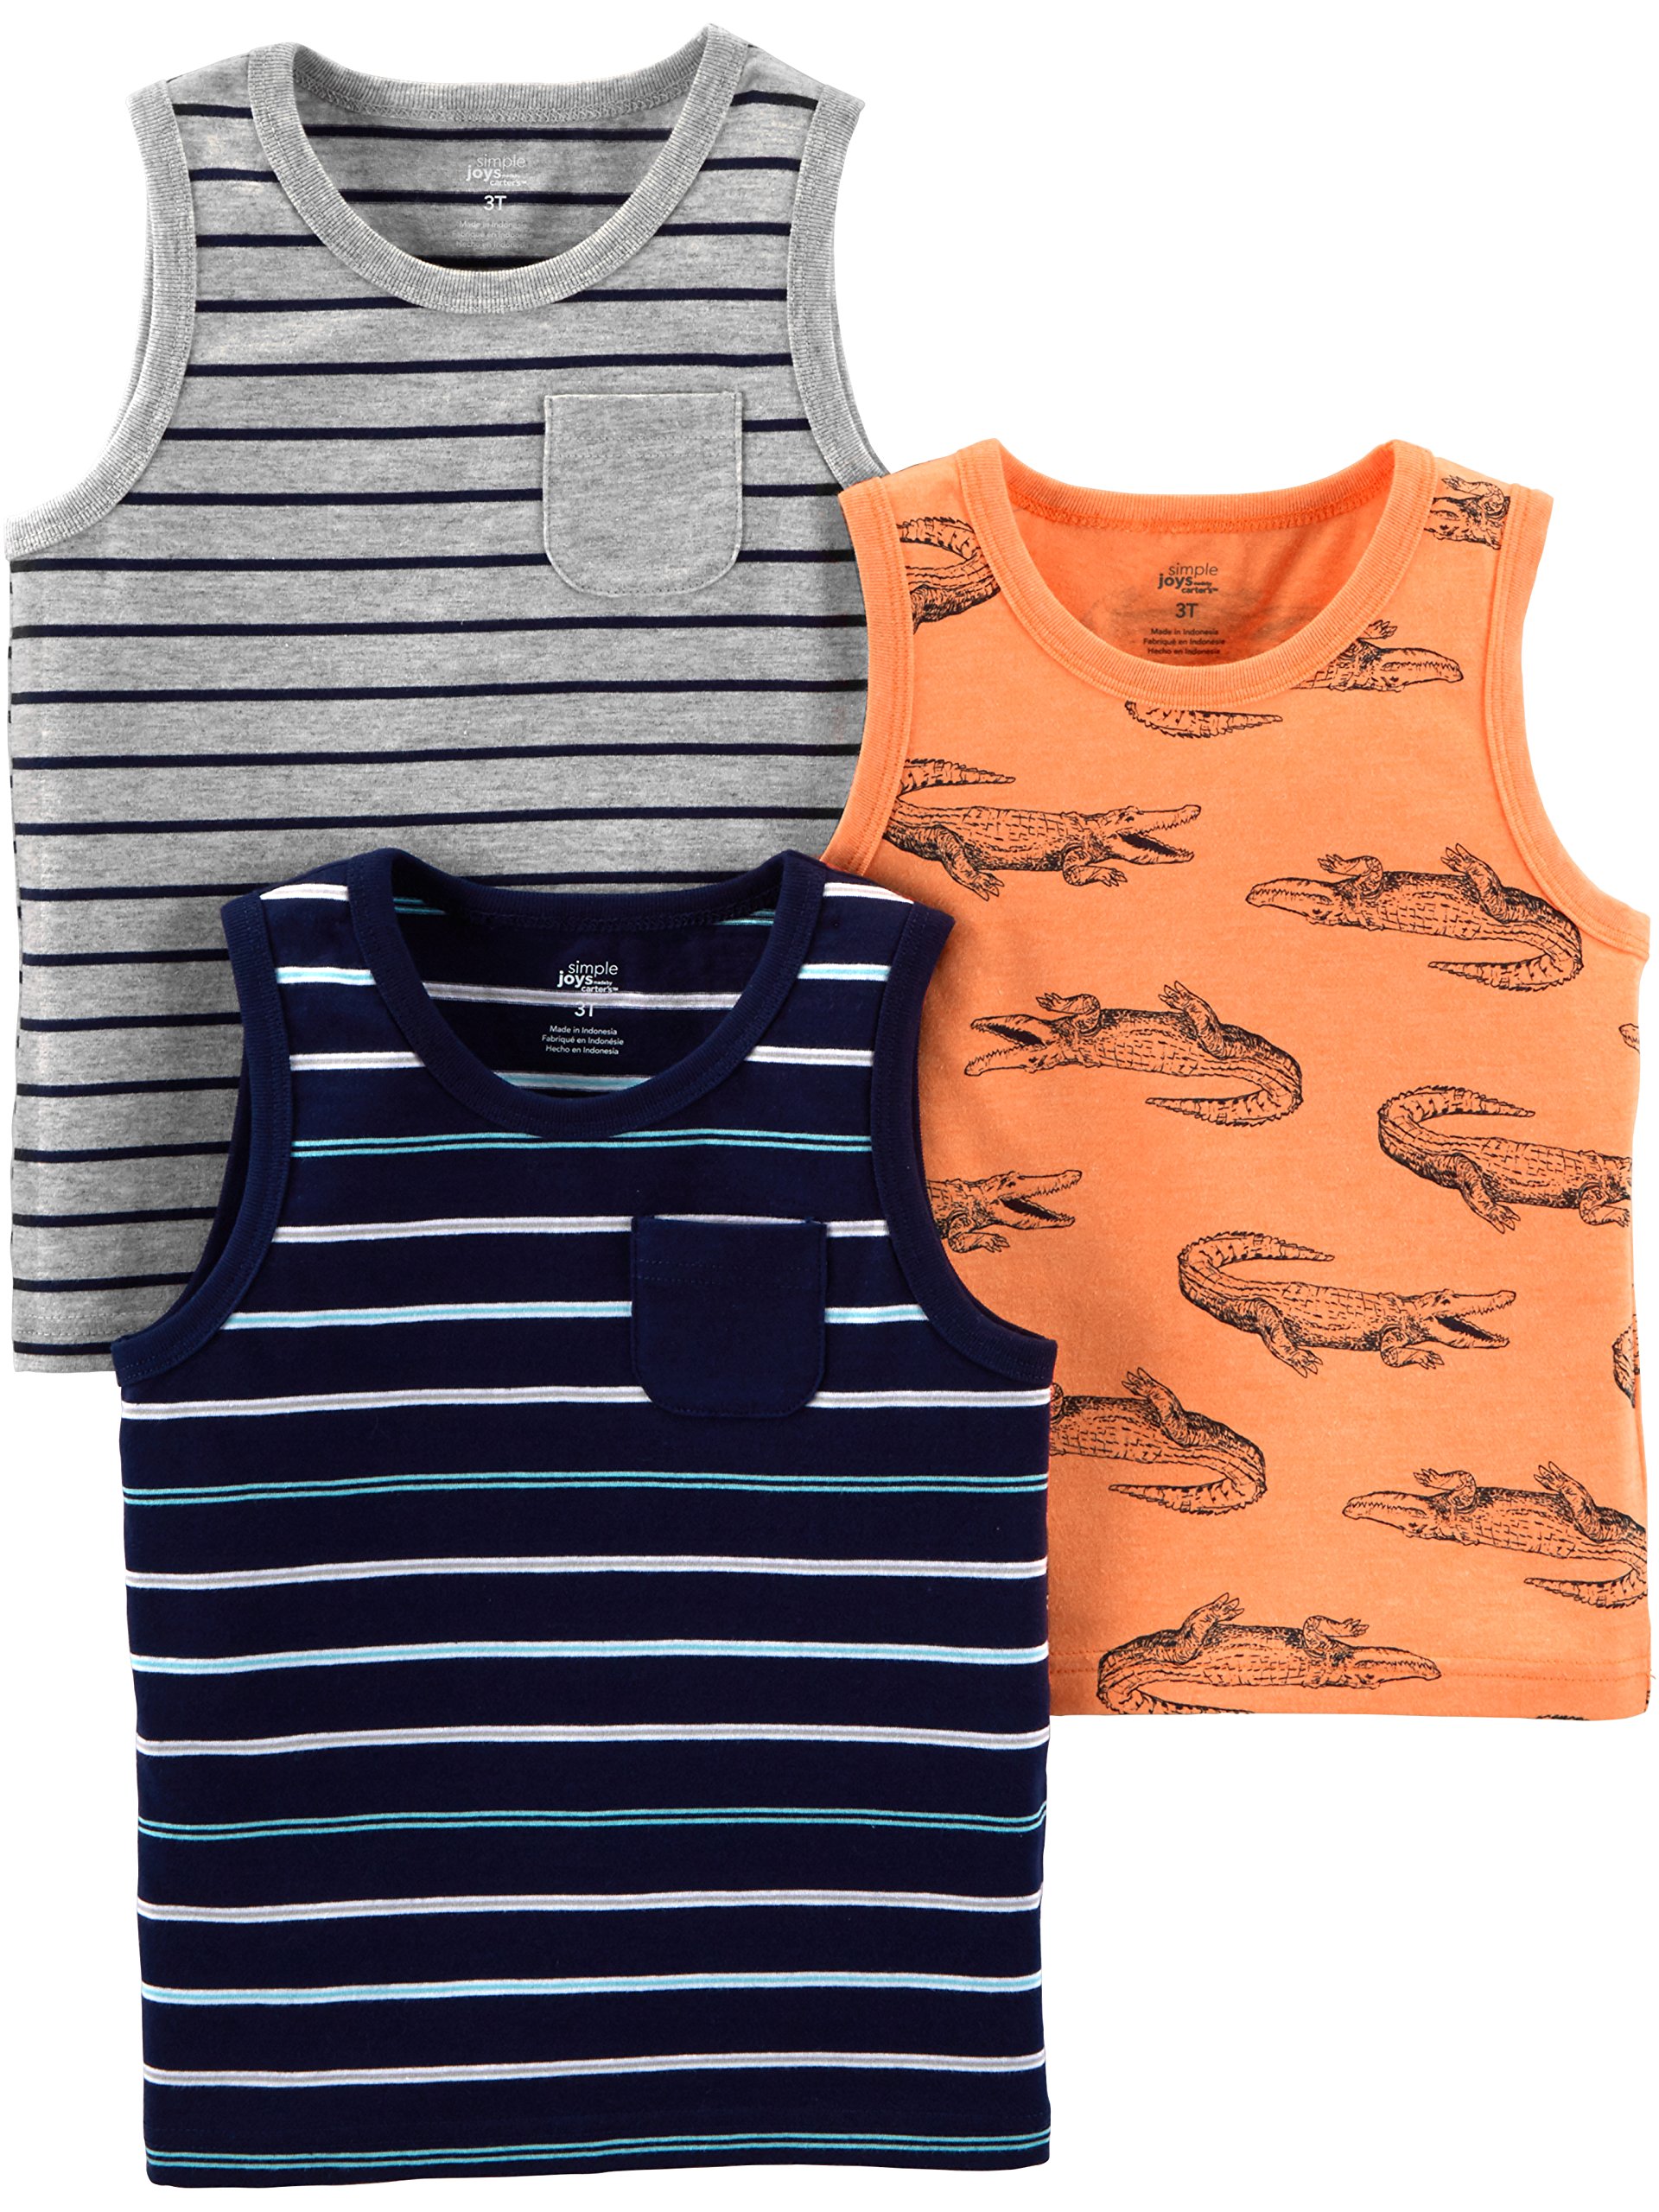 Simple Joys by Carter's Boys' 3-Pack Muscle Tank Tops, Grey Stripe/Light Orange Alligator/Navy Double Stripe, 12 Months